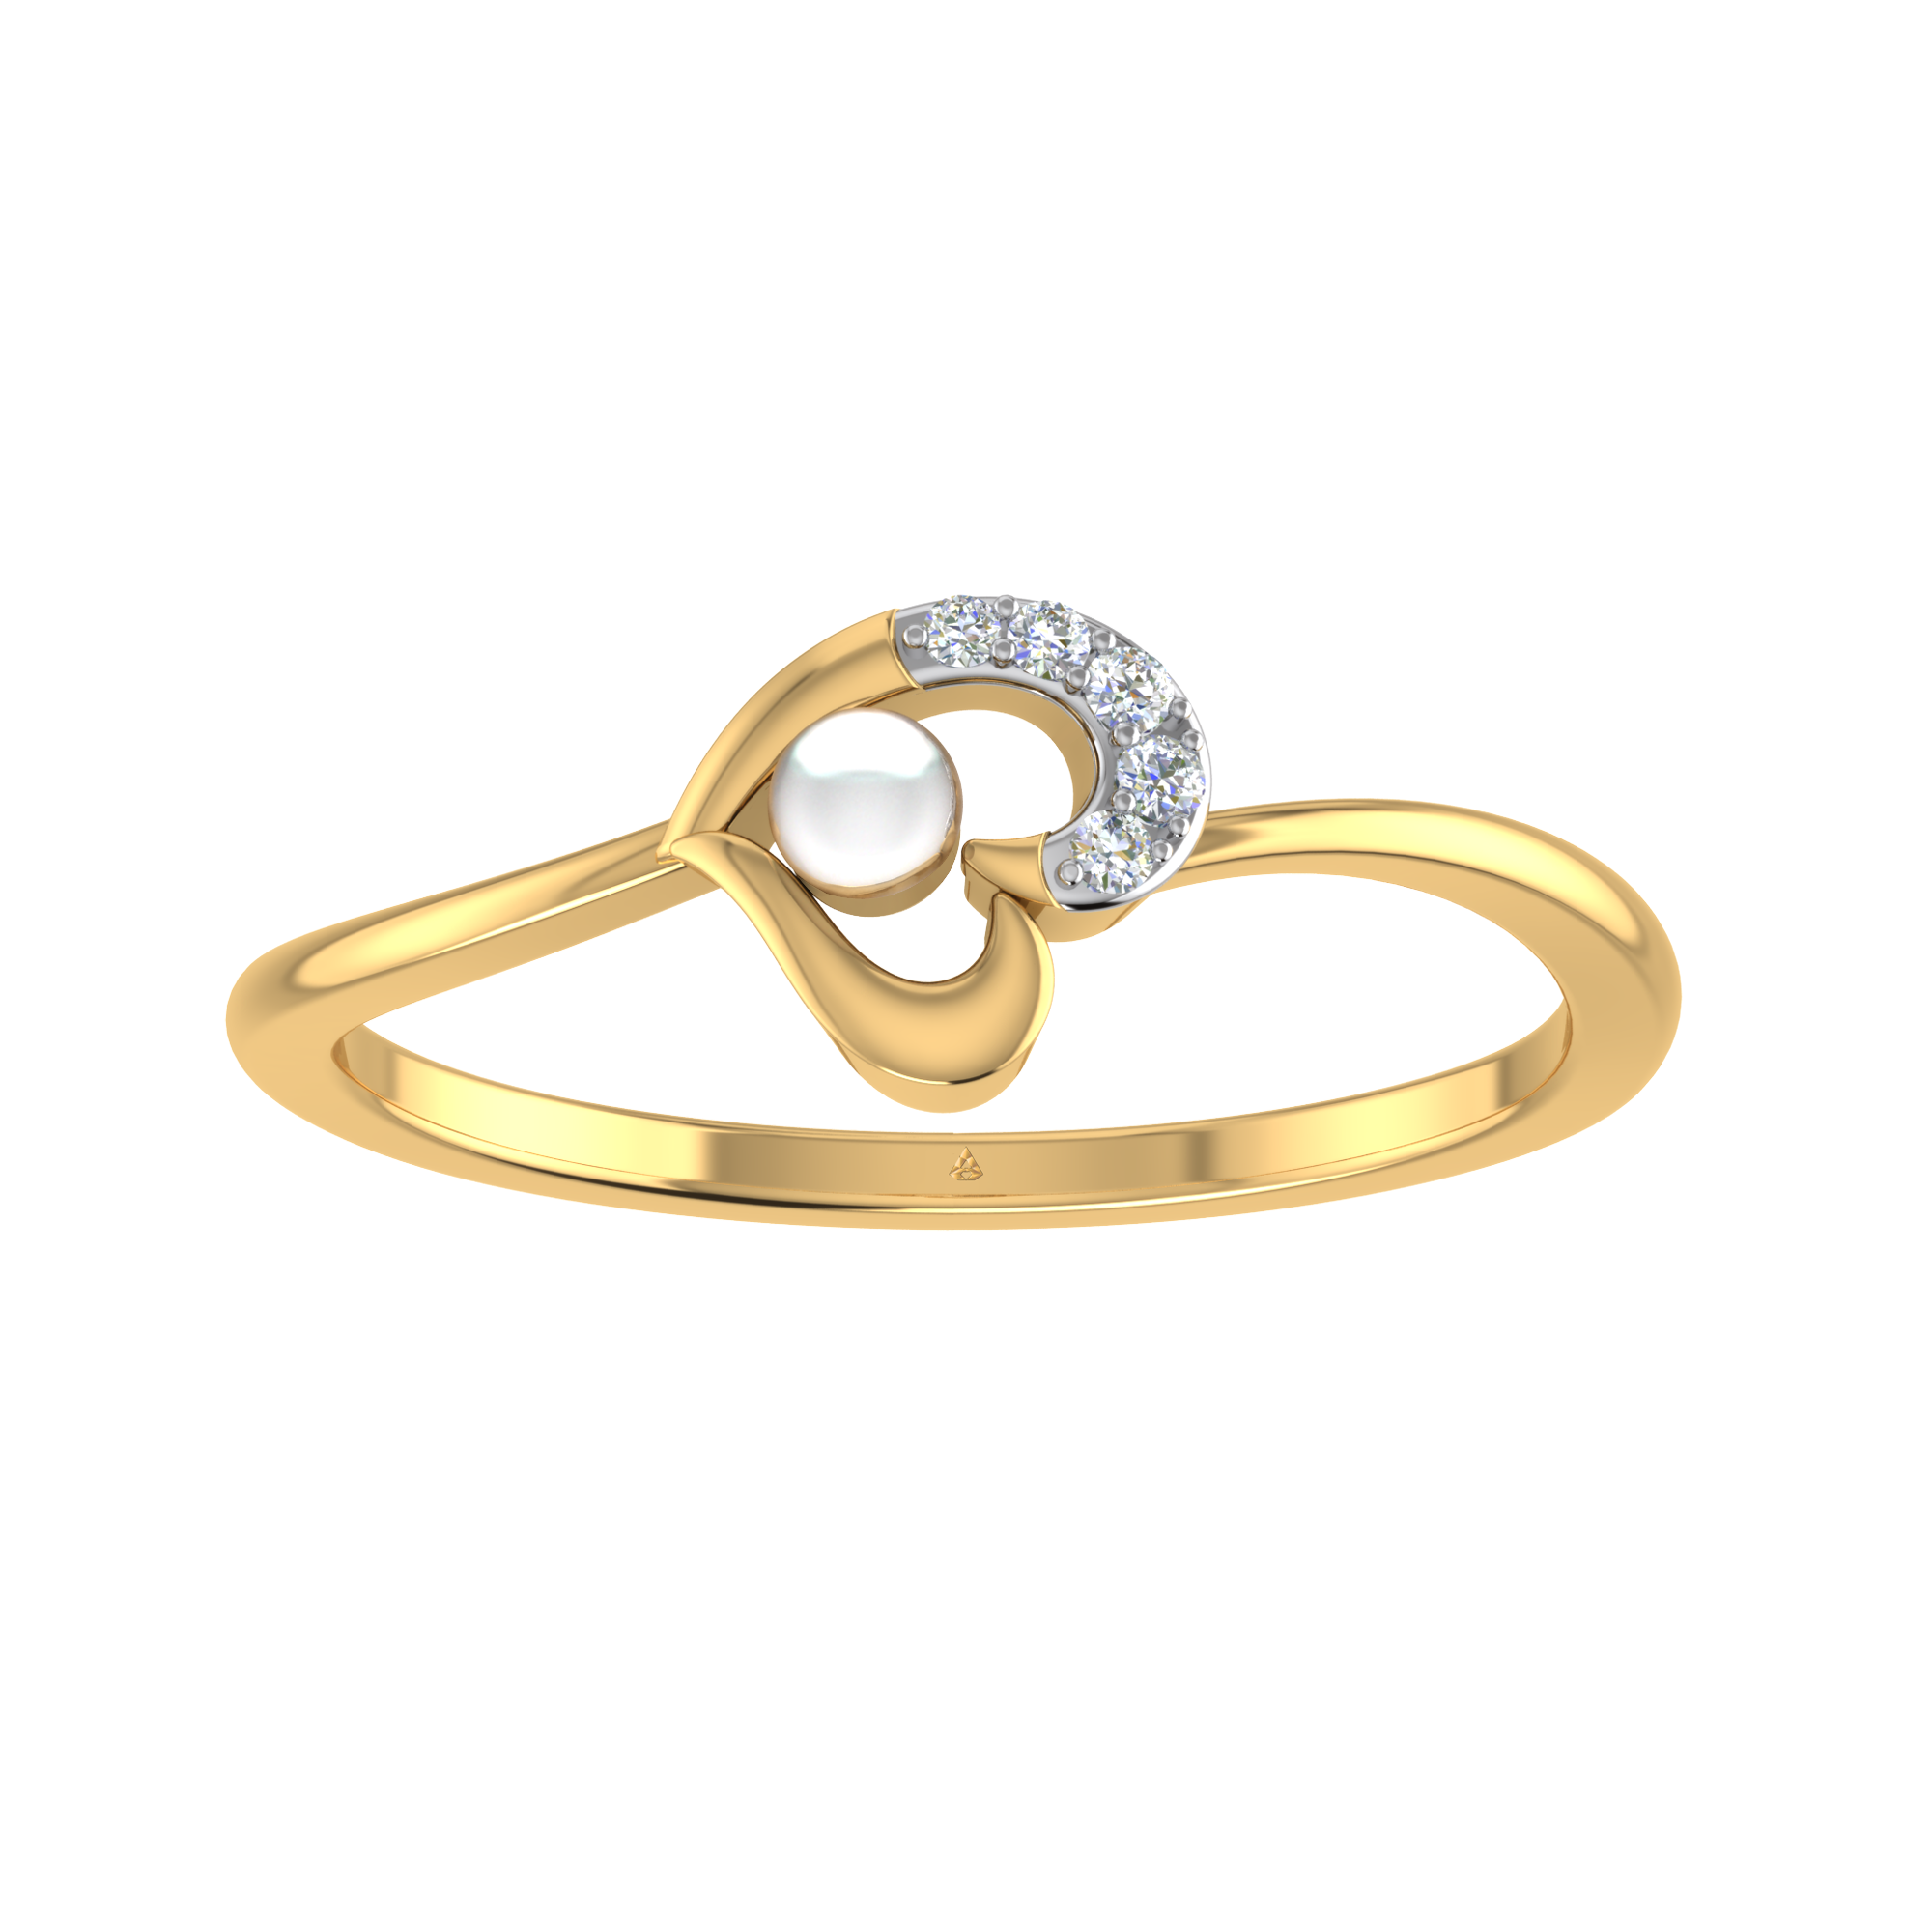 14K Rose Gold Heart Shaped Diamond Ring